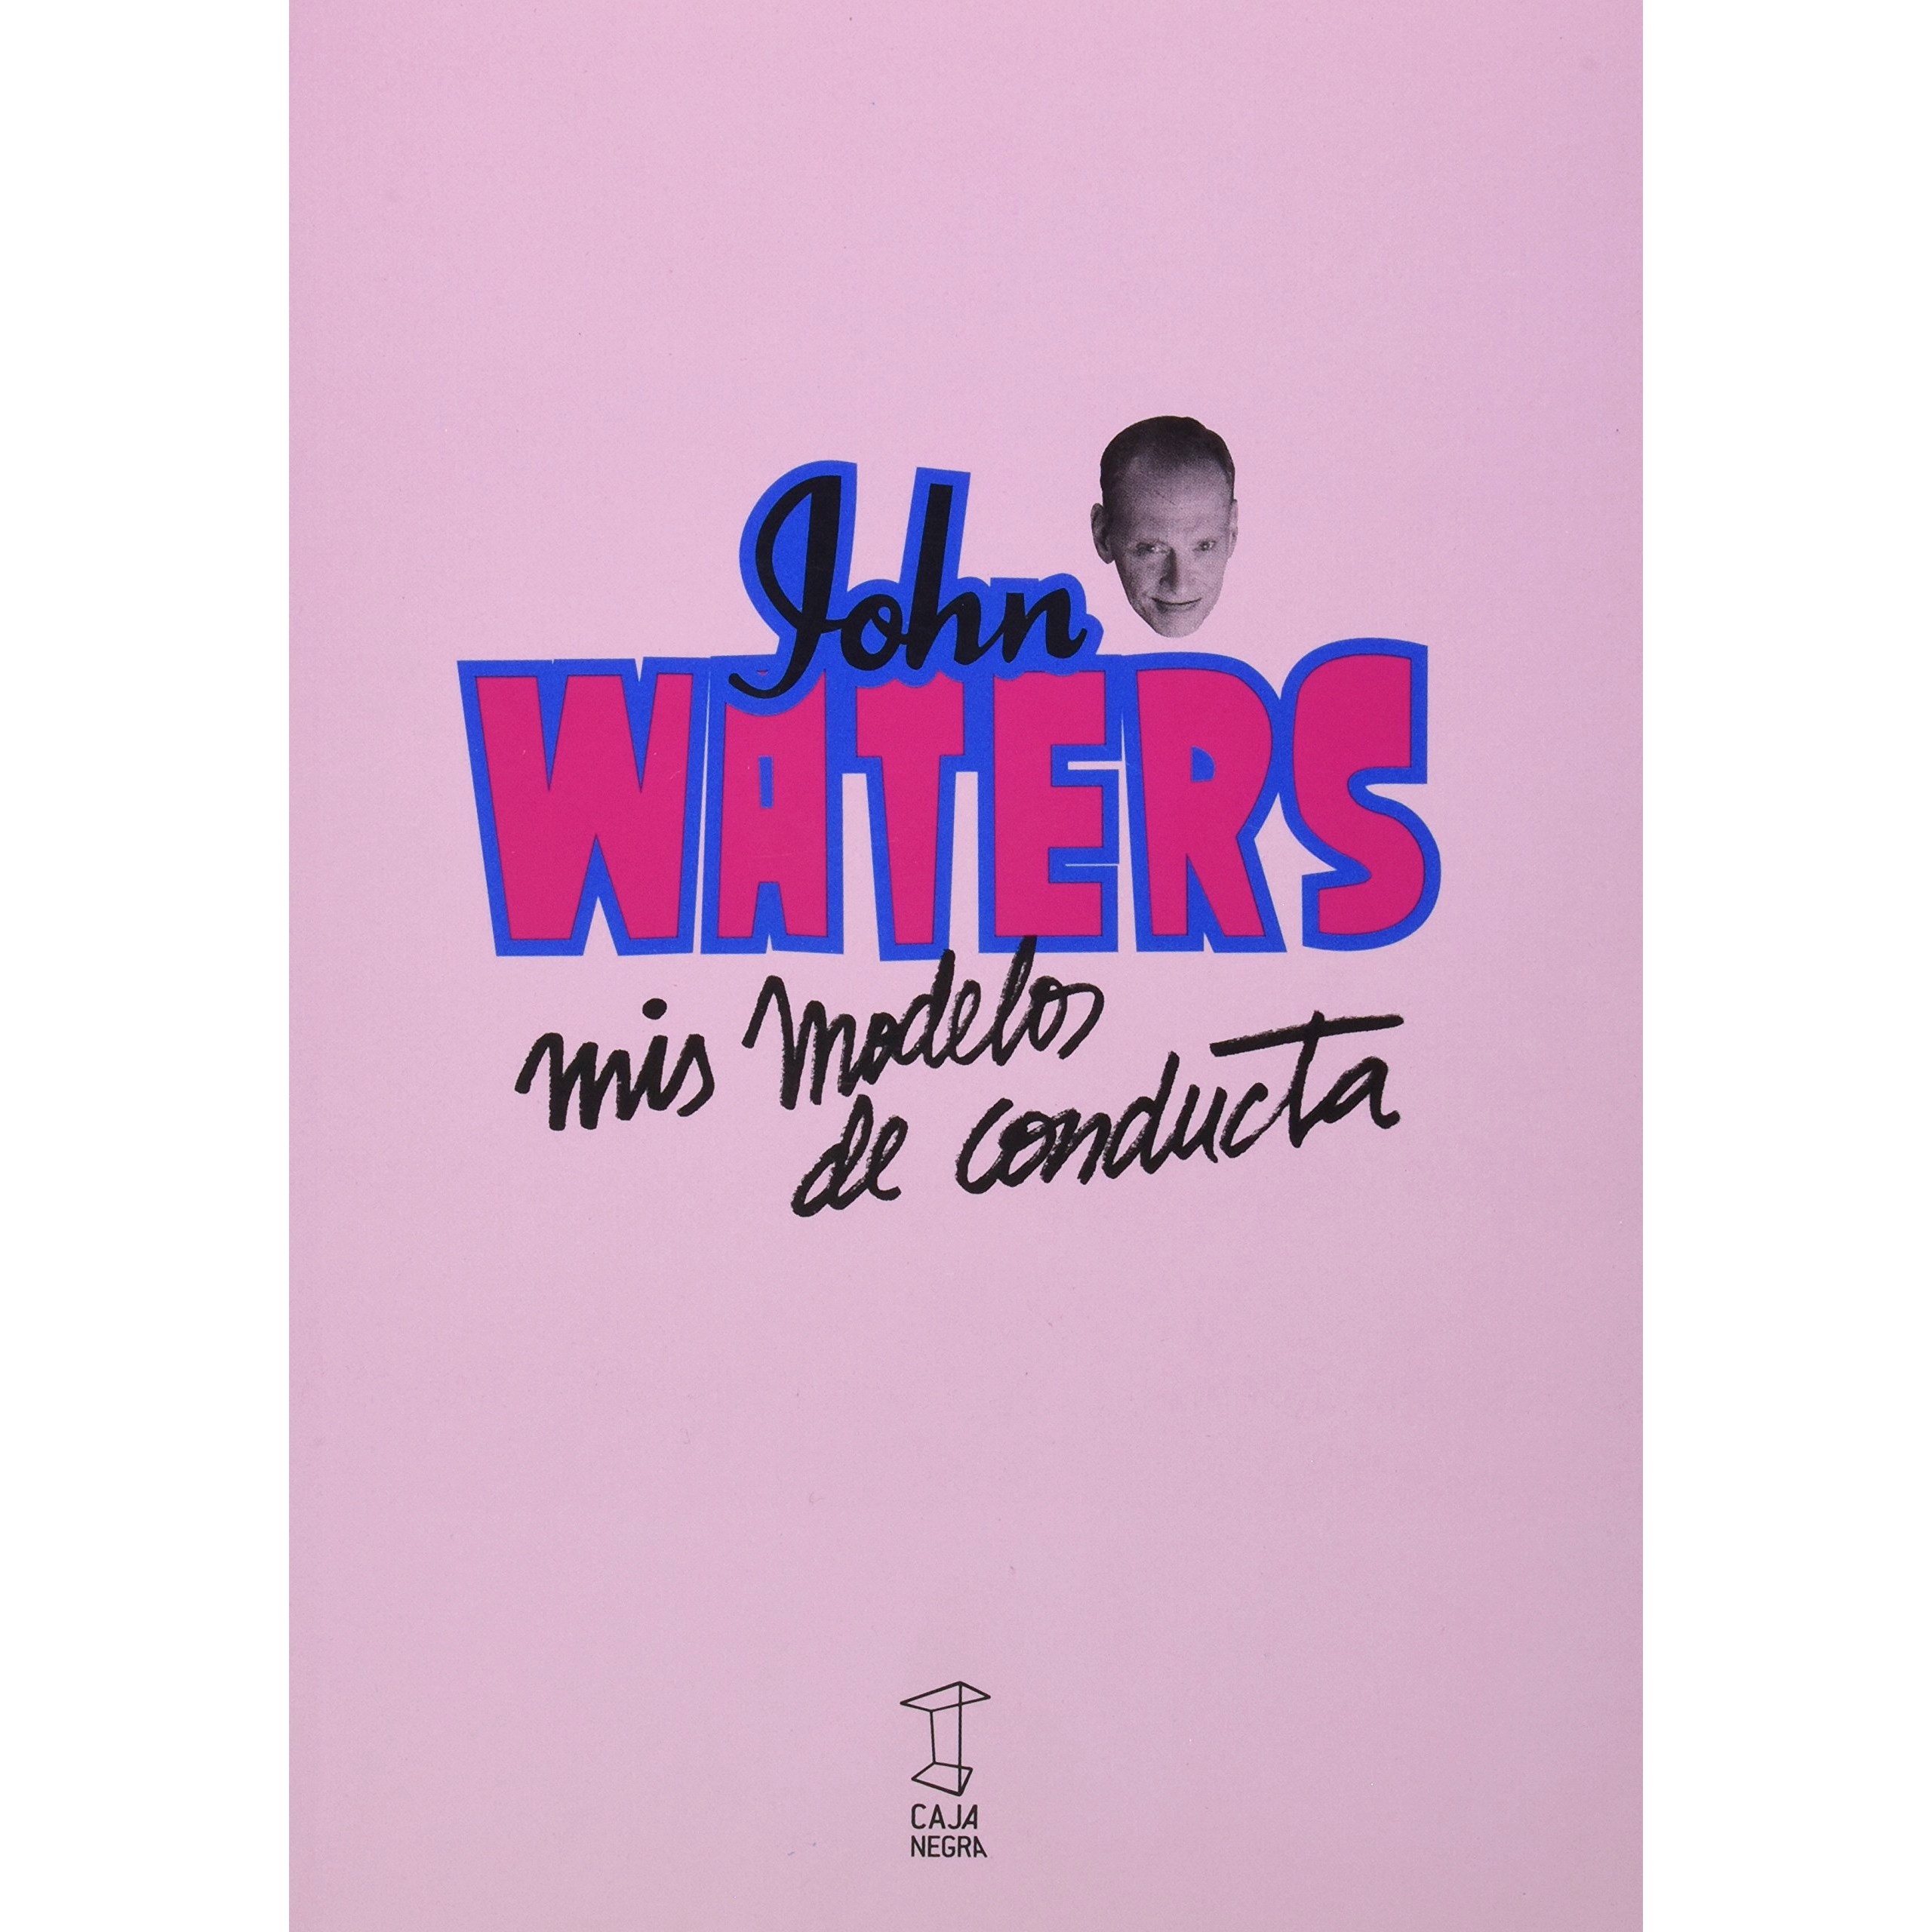 "Mis modelos de conducta" de John Waters